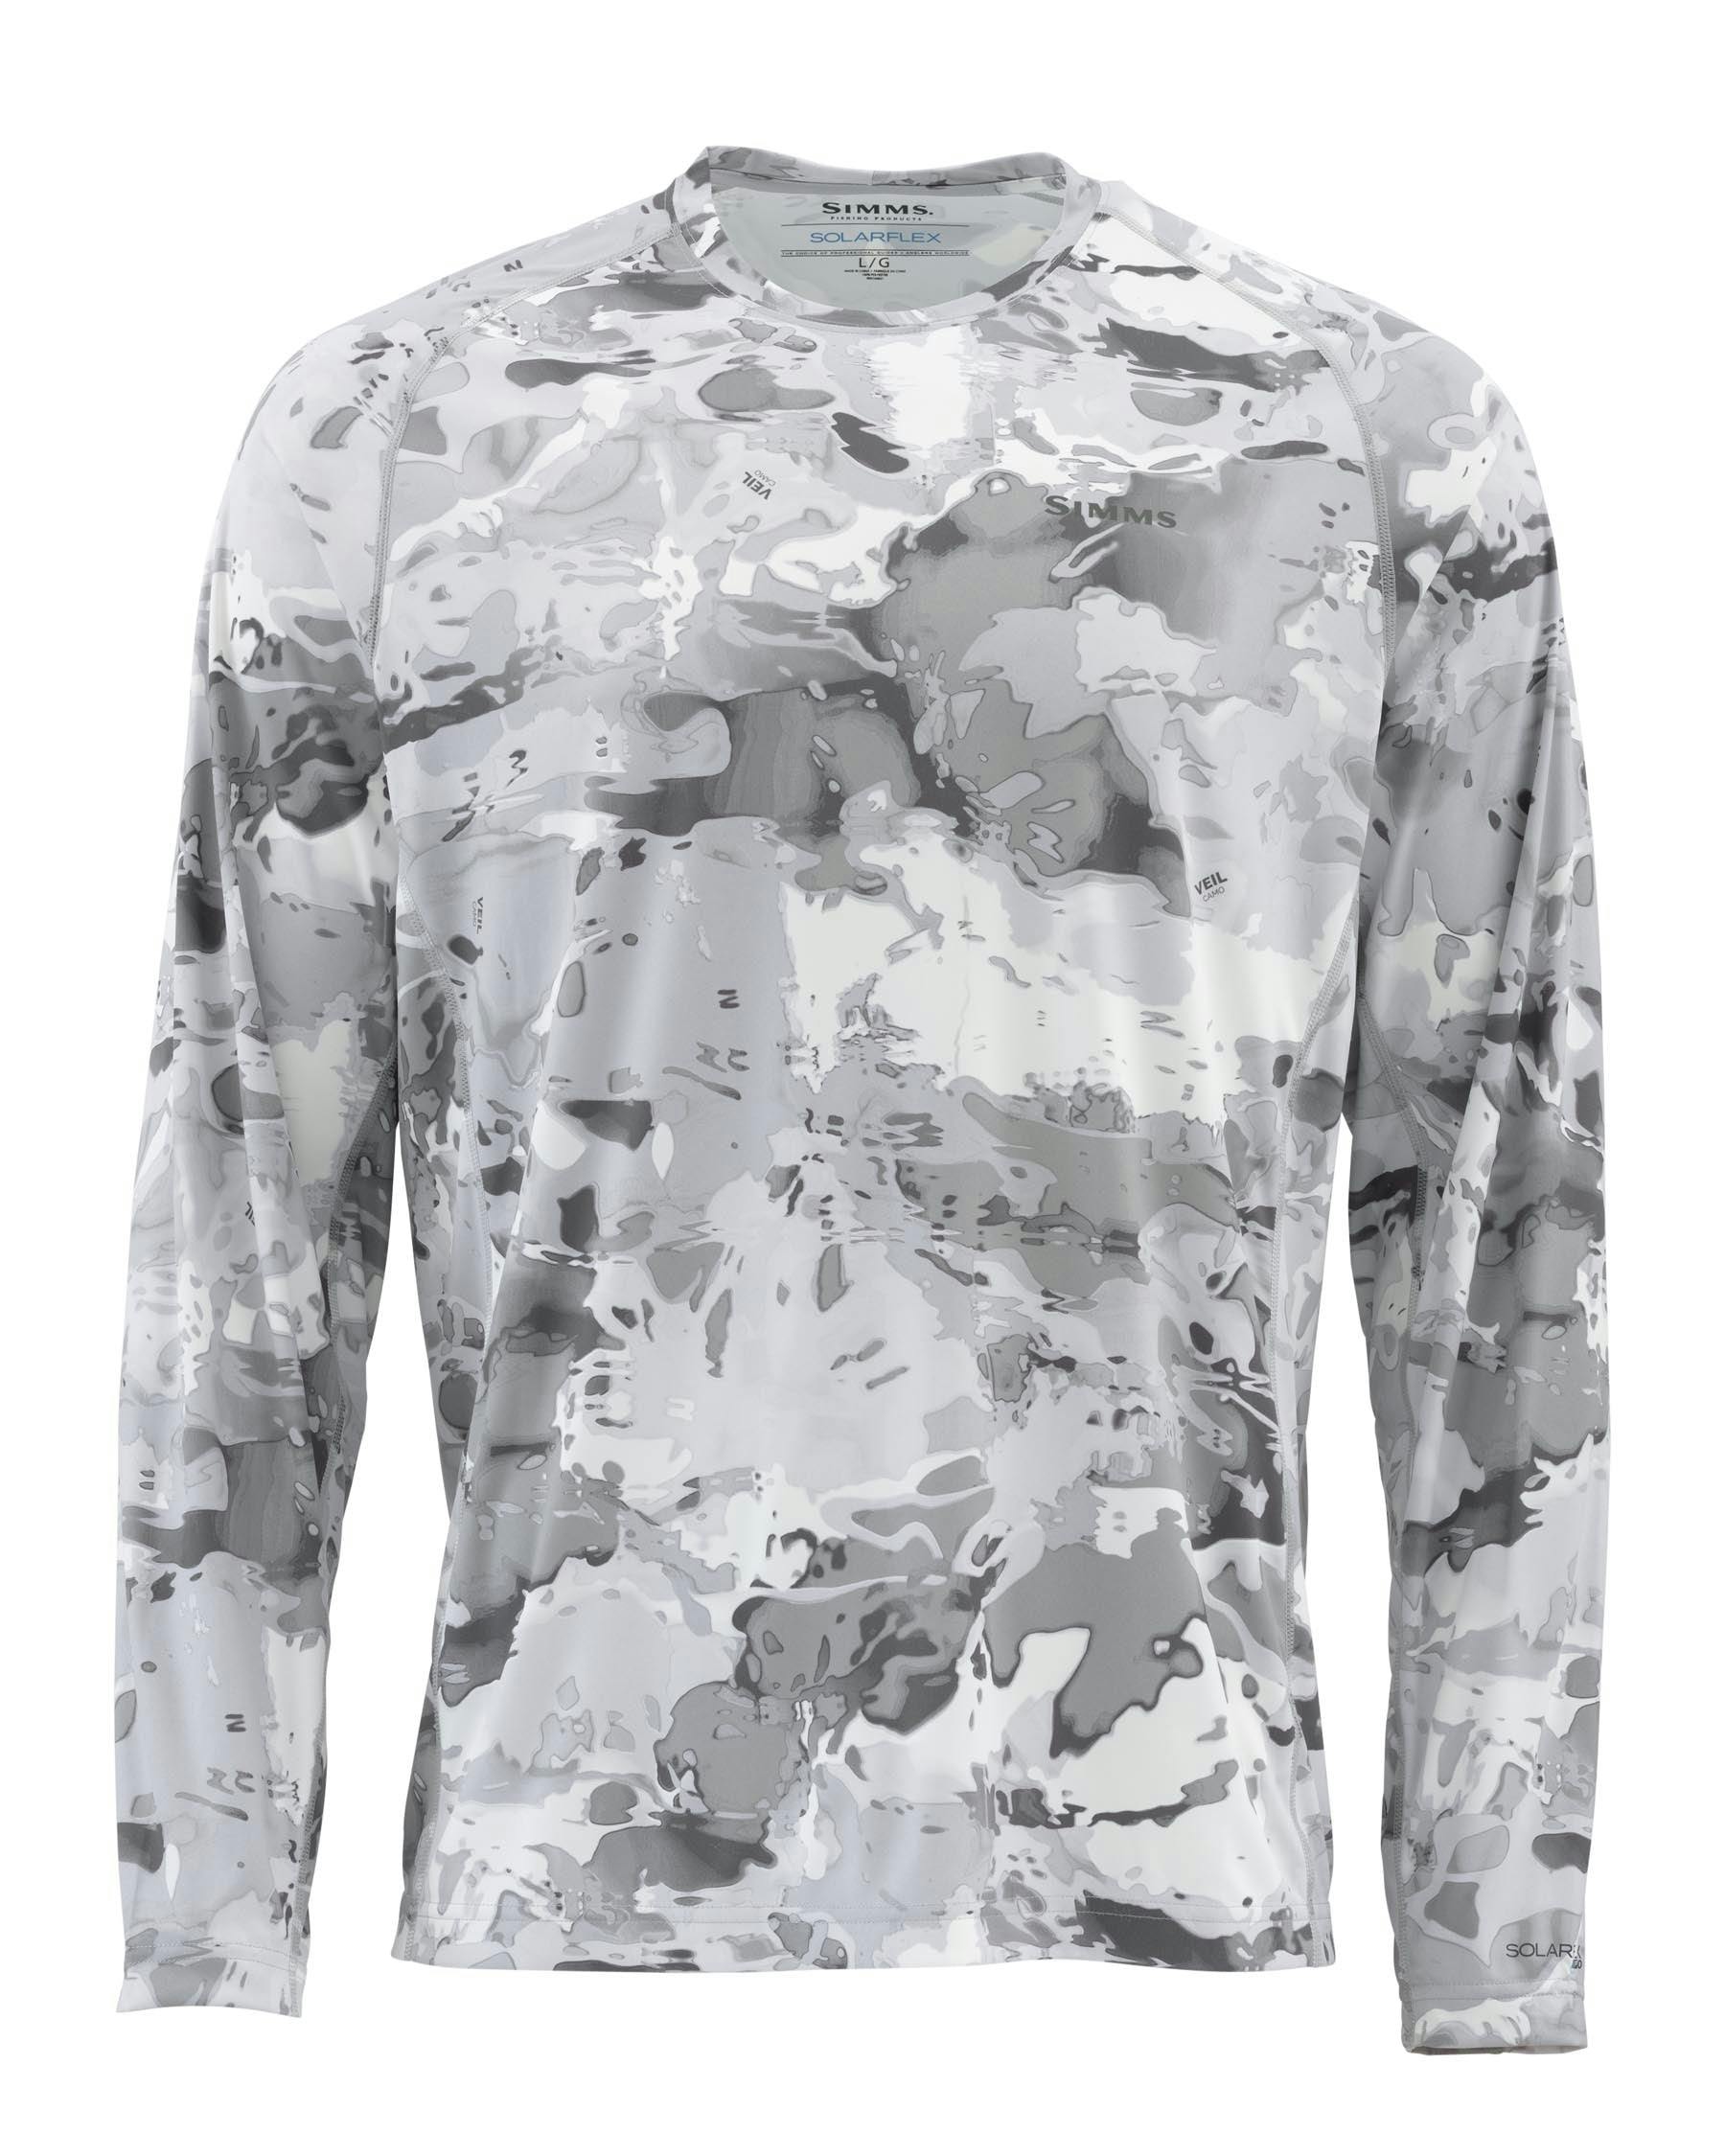 Simms Men's SolarFlex Long Sleeve Crewneck Shirt - Print